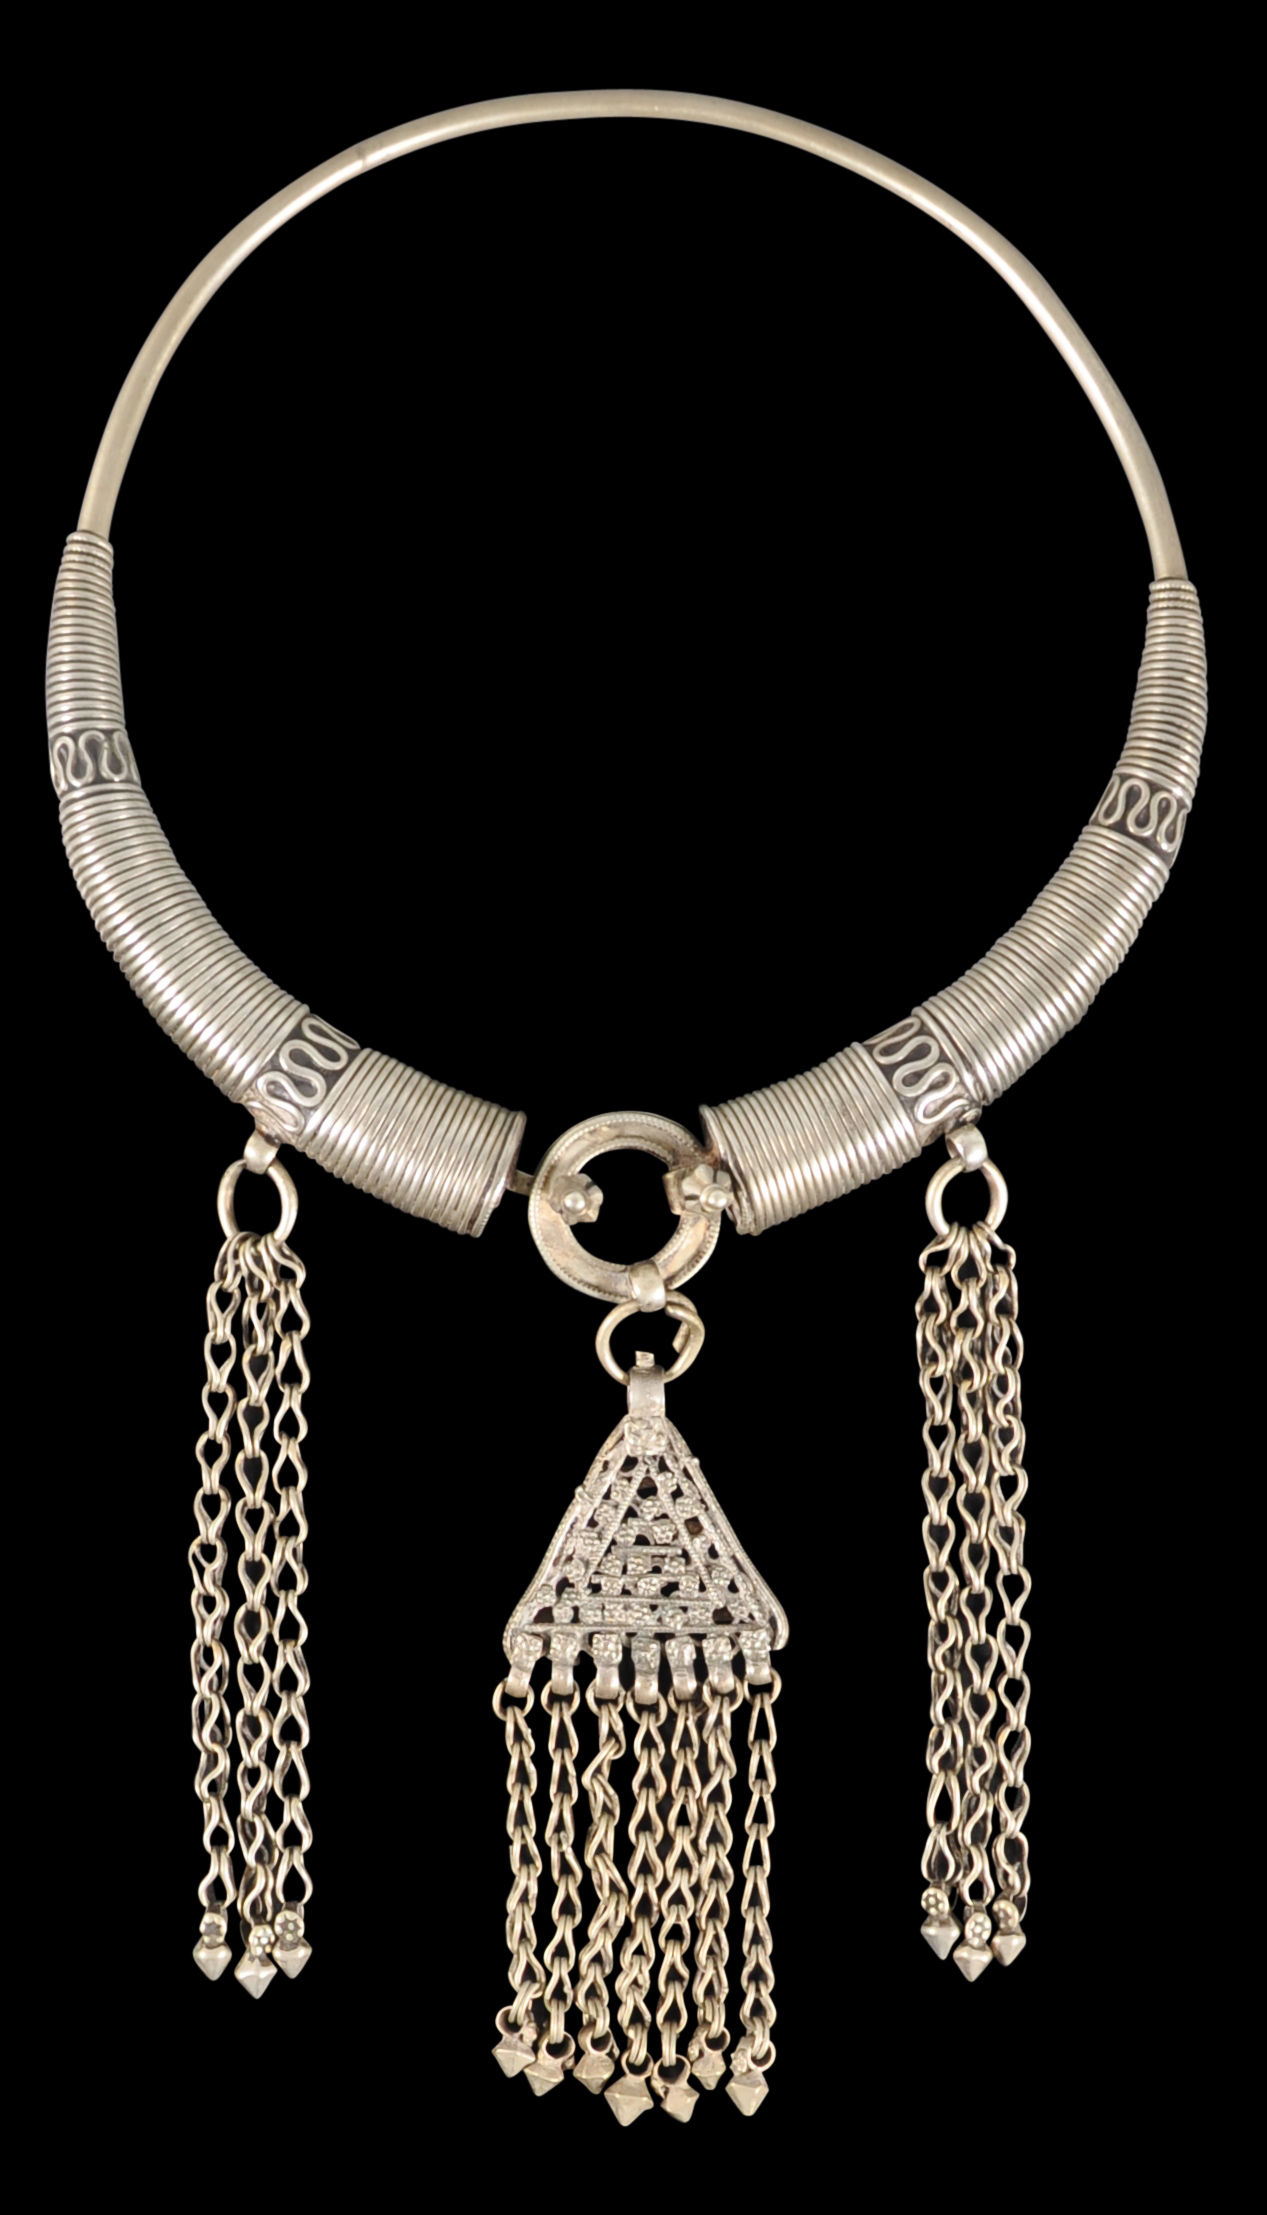 Lot of 2) Tribal Indian Banjara torque coin necklaces